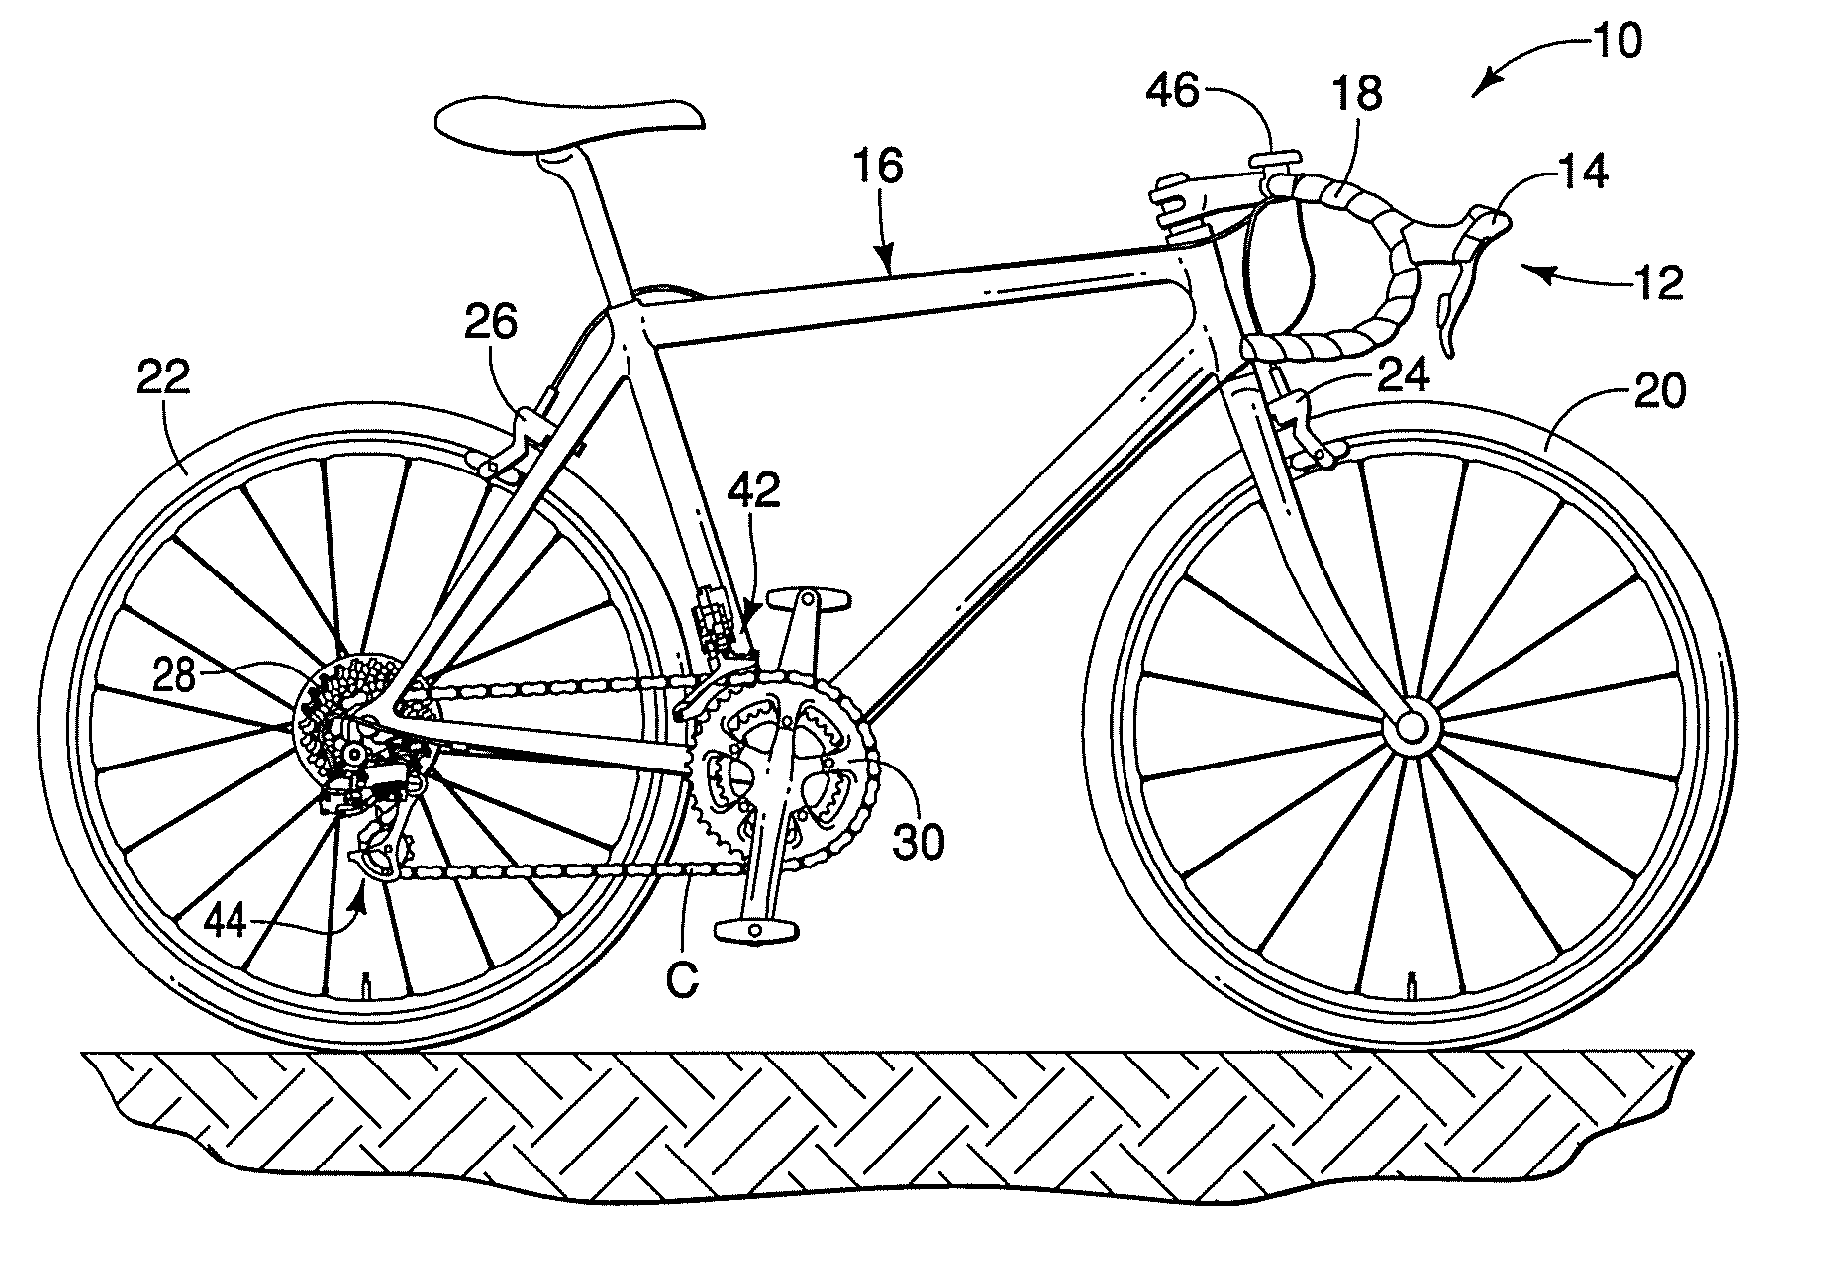 Wireless bicycle communication device